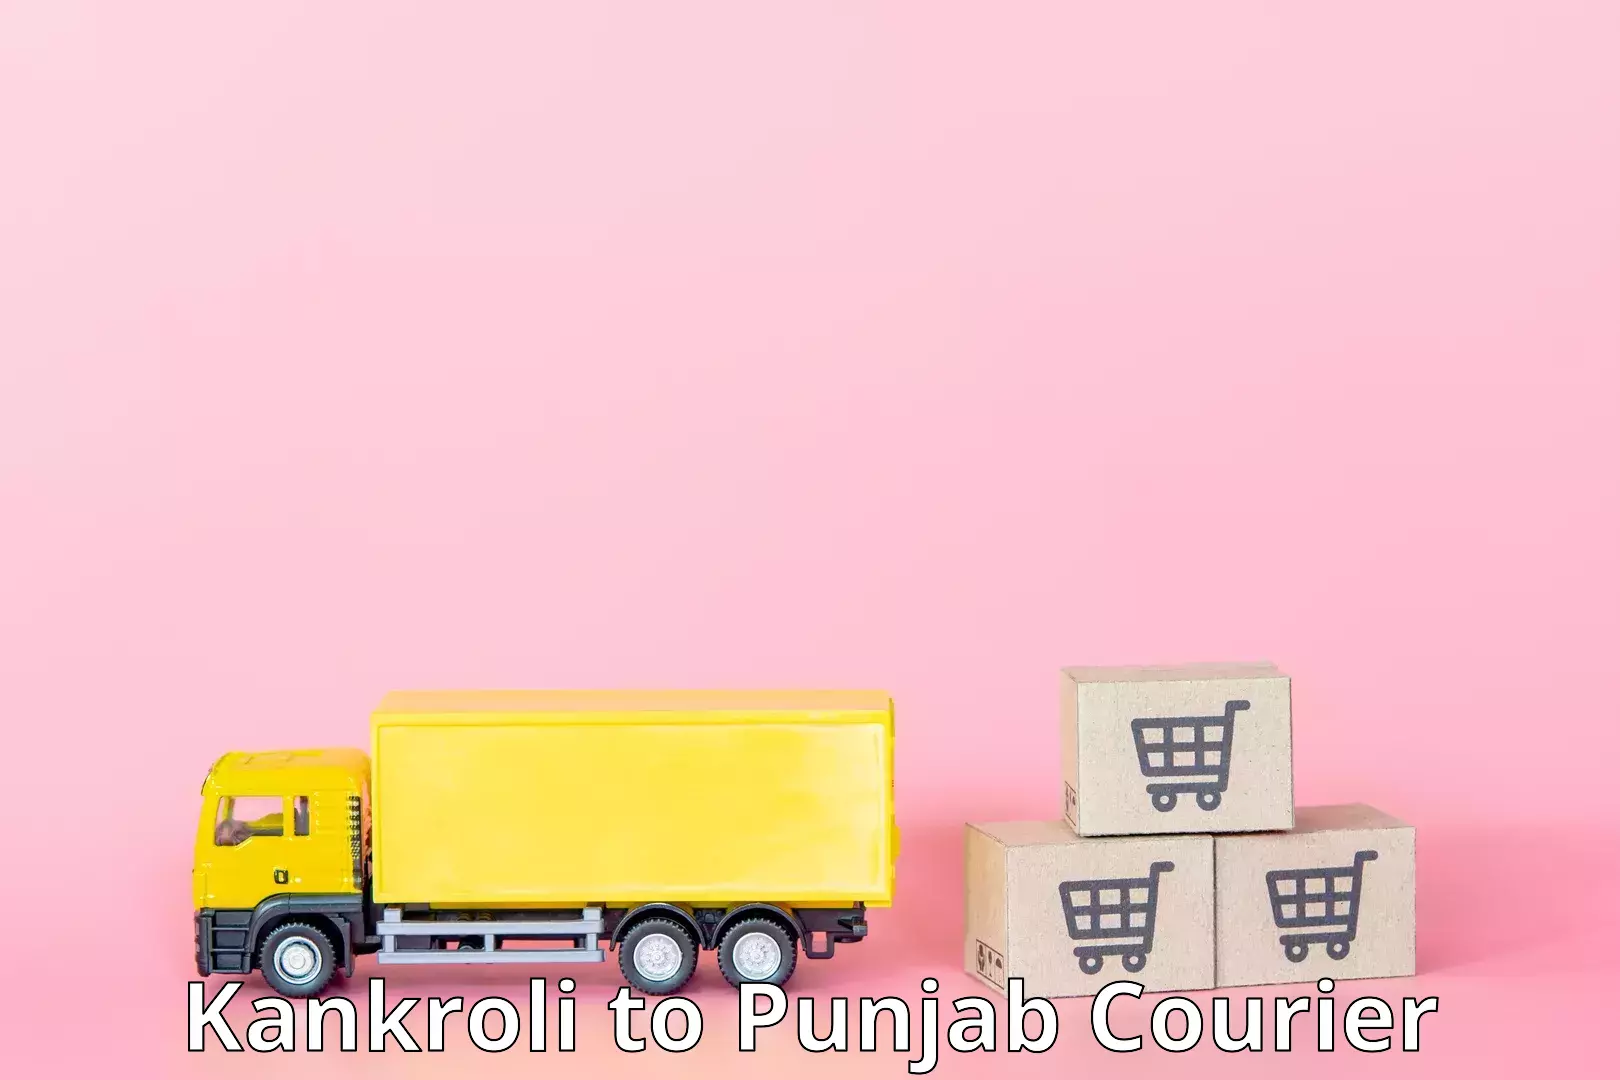 Parcel handling and care Kankroli to Punjab